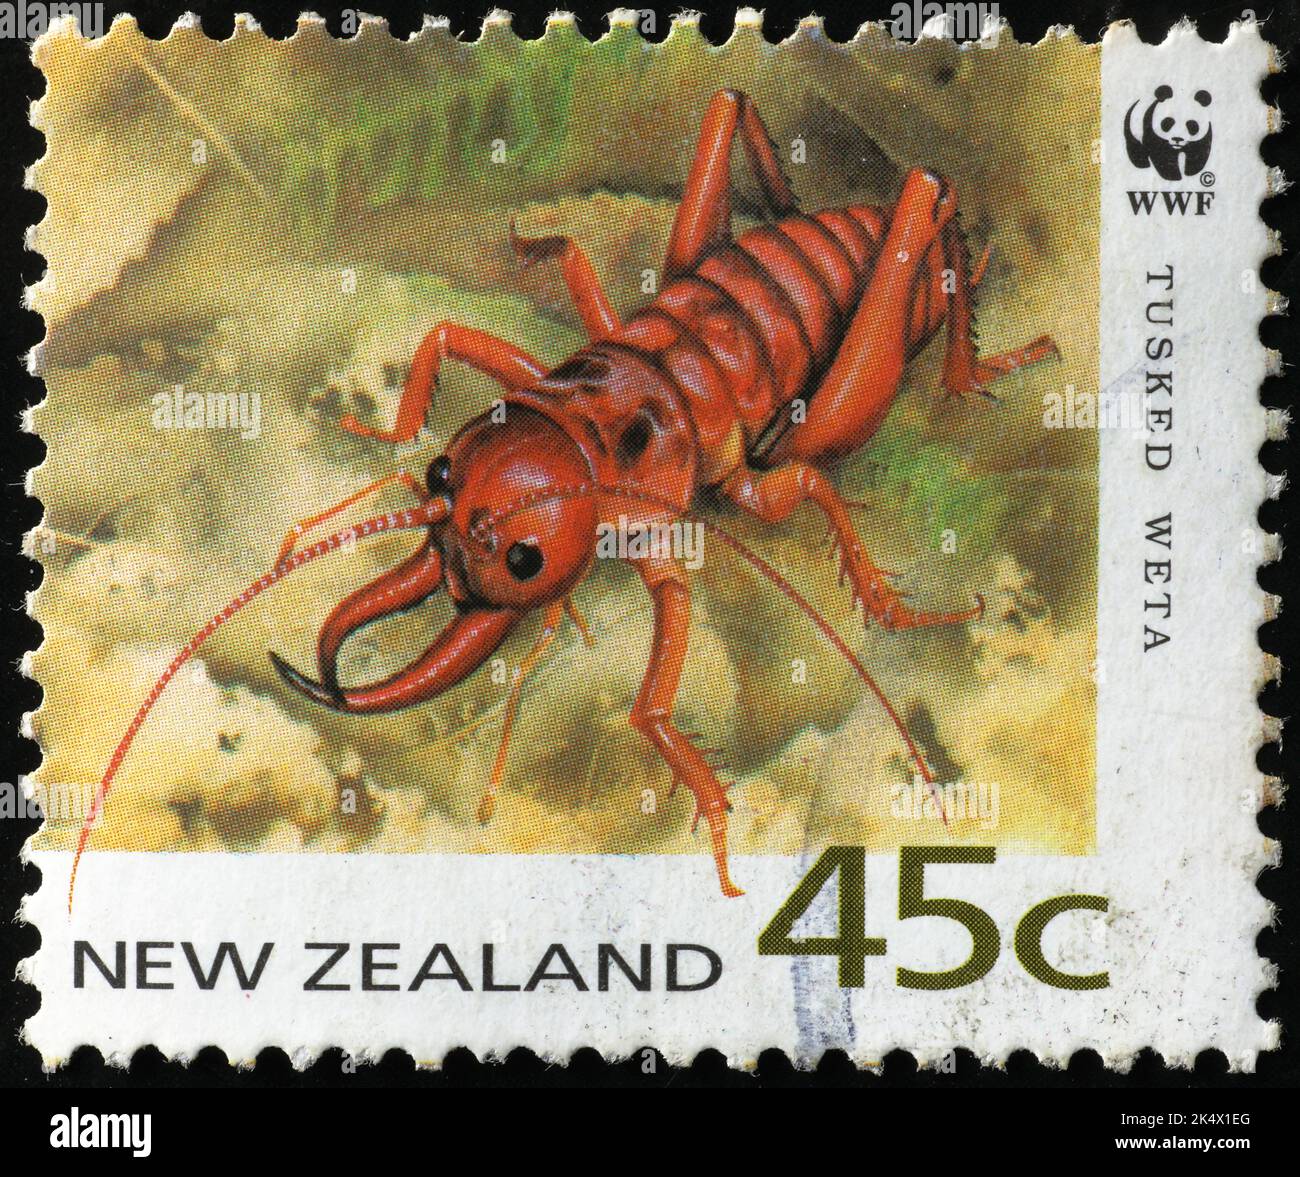 Tusked weta, giant cricket of New Zealand on stamp Stock Photo